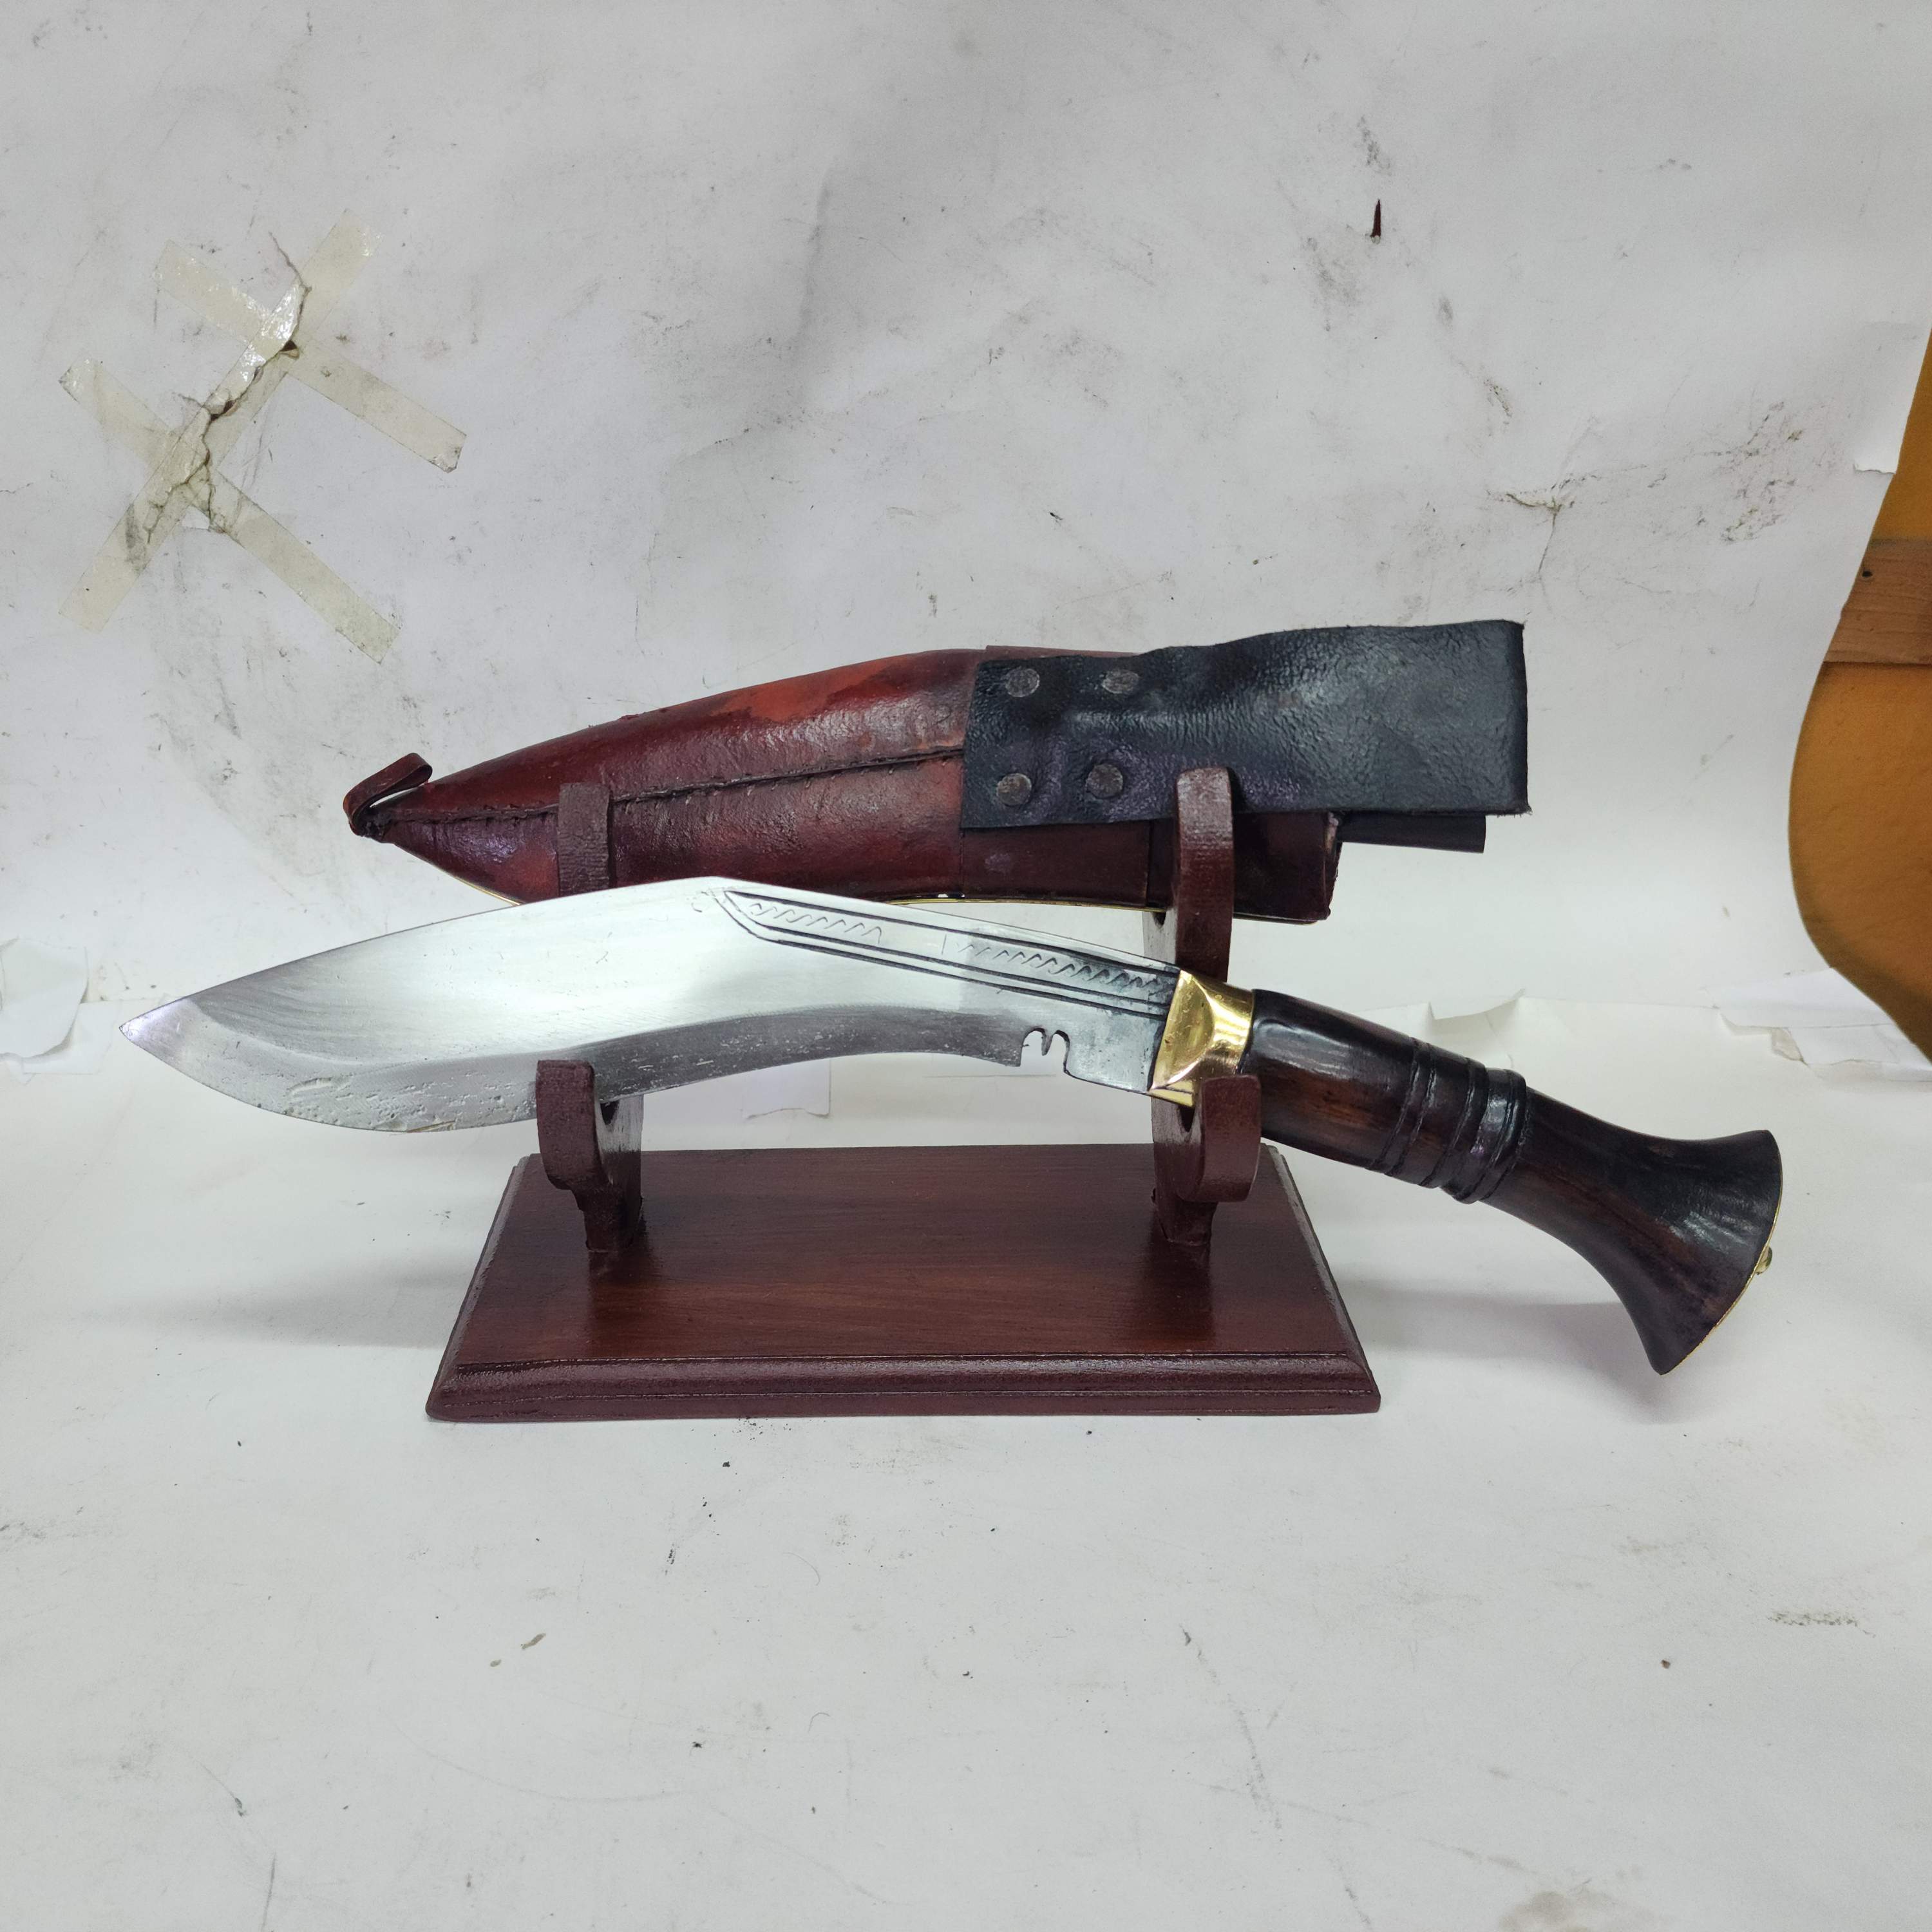 8 Inch, khukuri, Gurkha Knife With Leather Cover And Stand, Nepali Machete, stone Setting